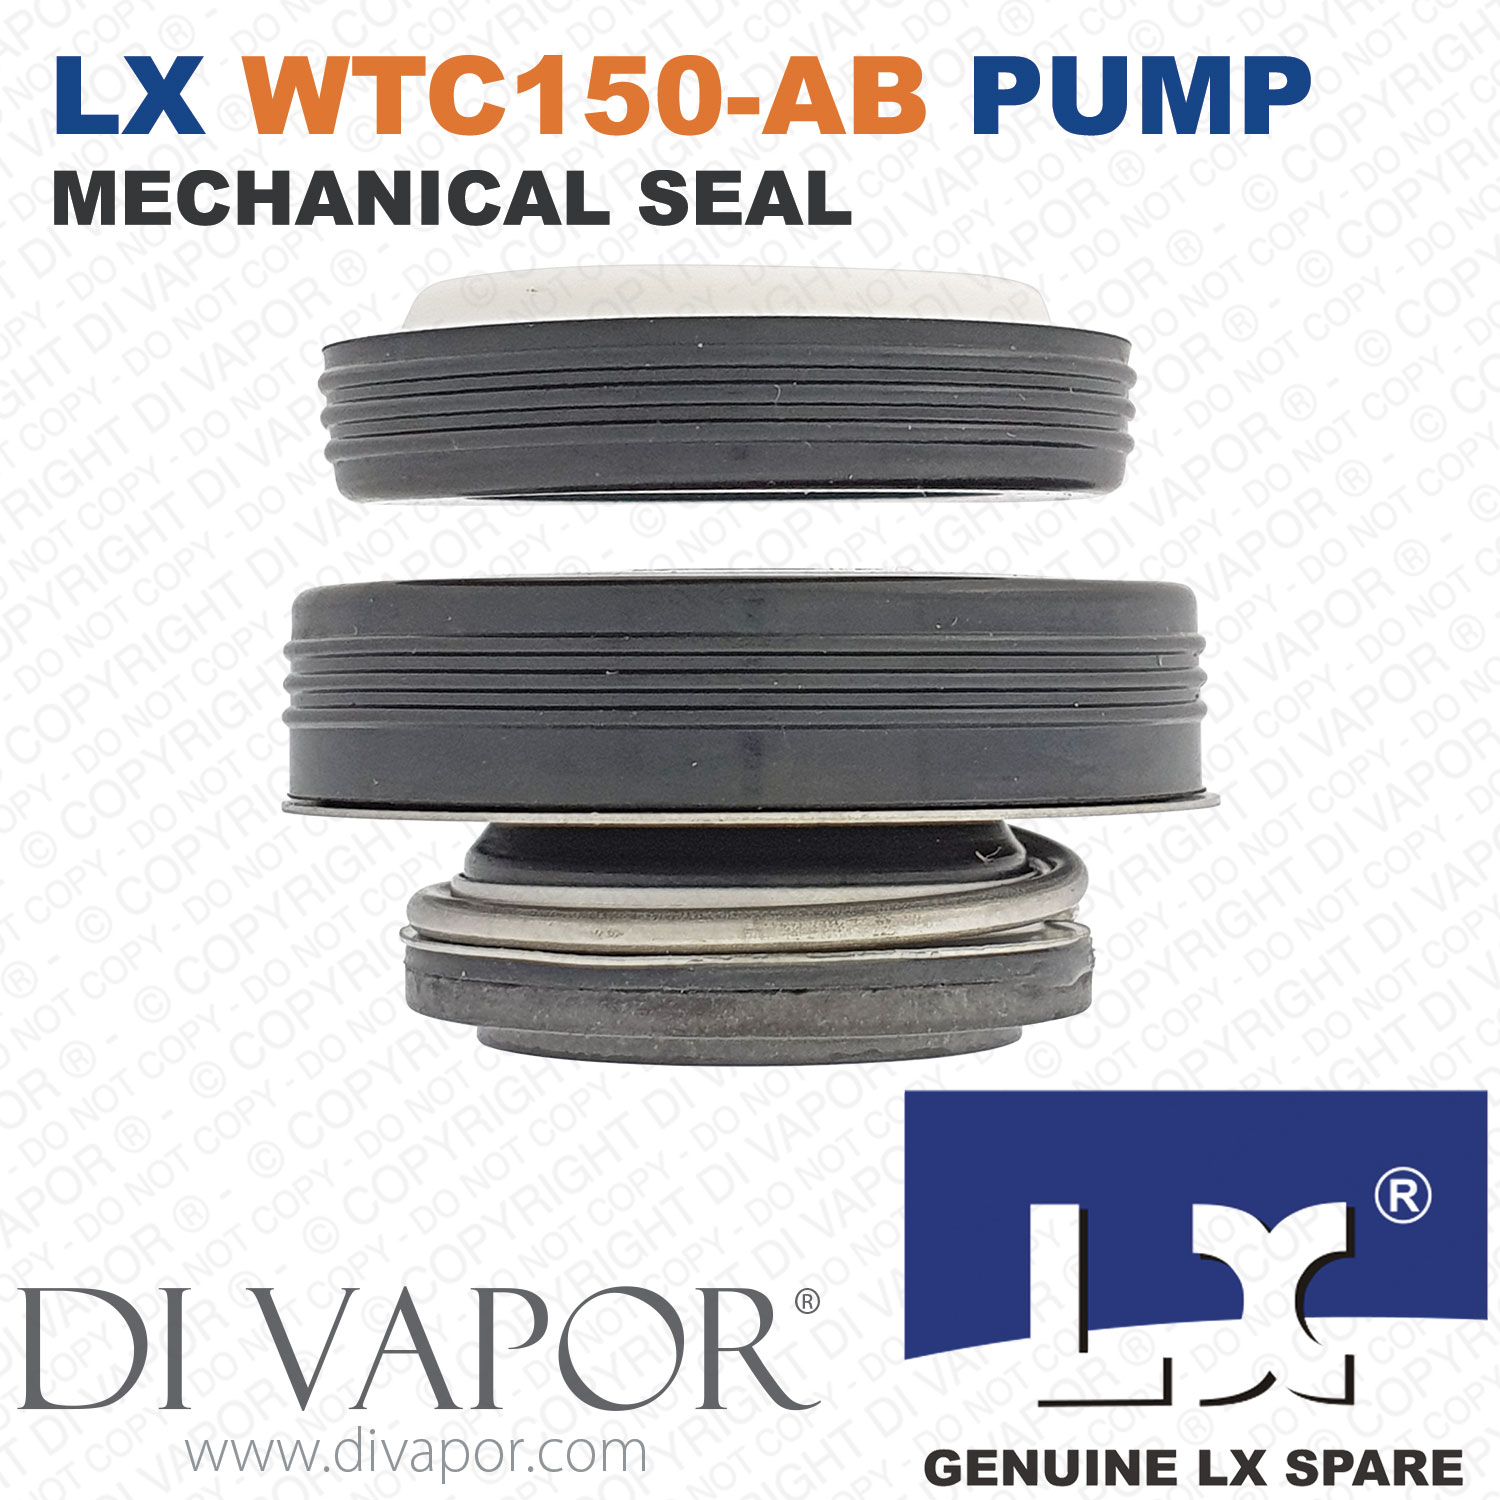 LX WTC150-AB Pump Mechanical Seal Spare